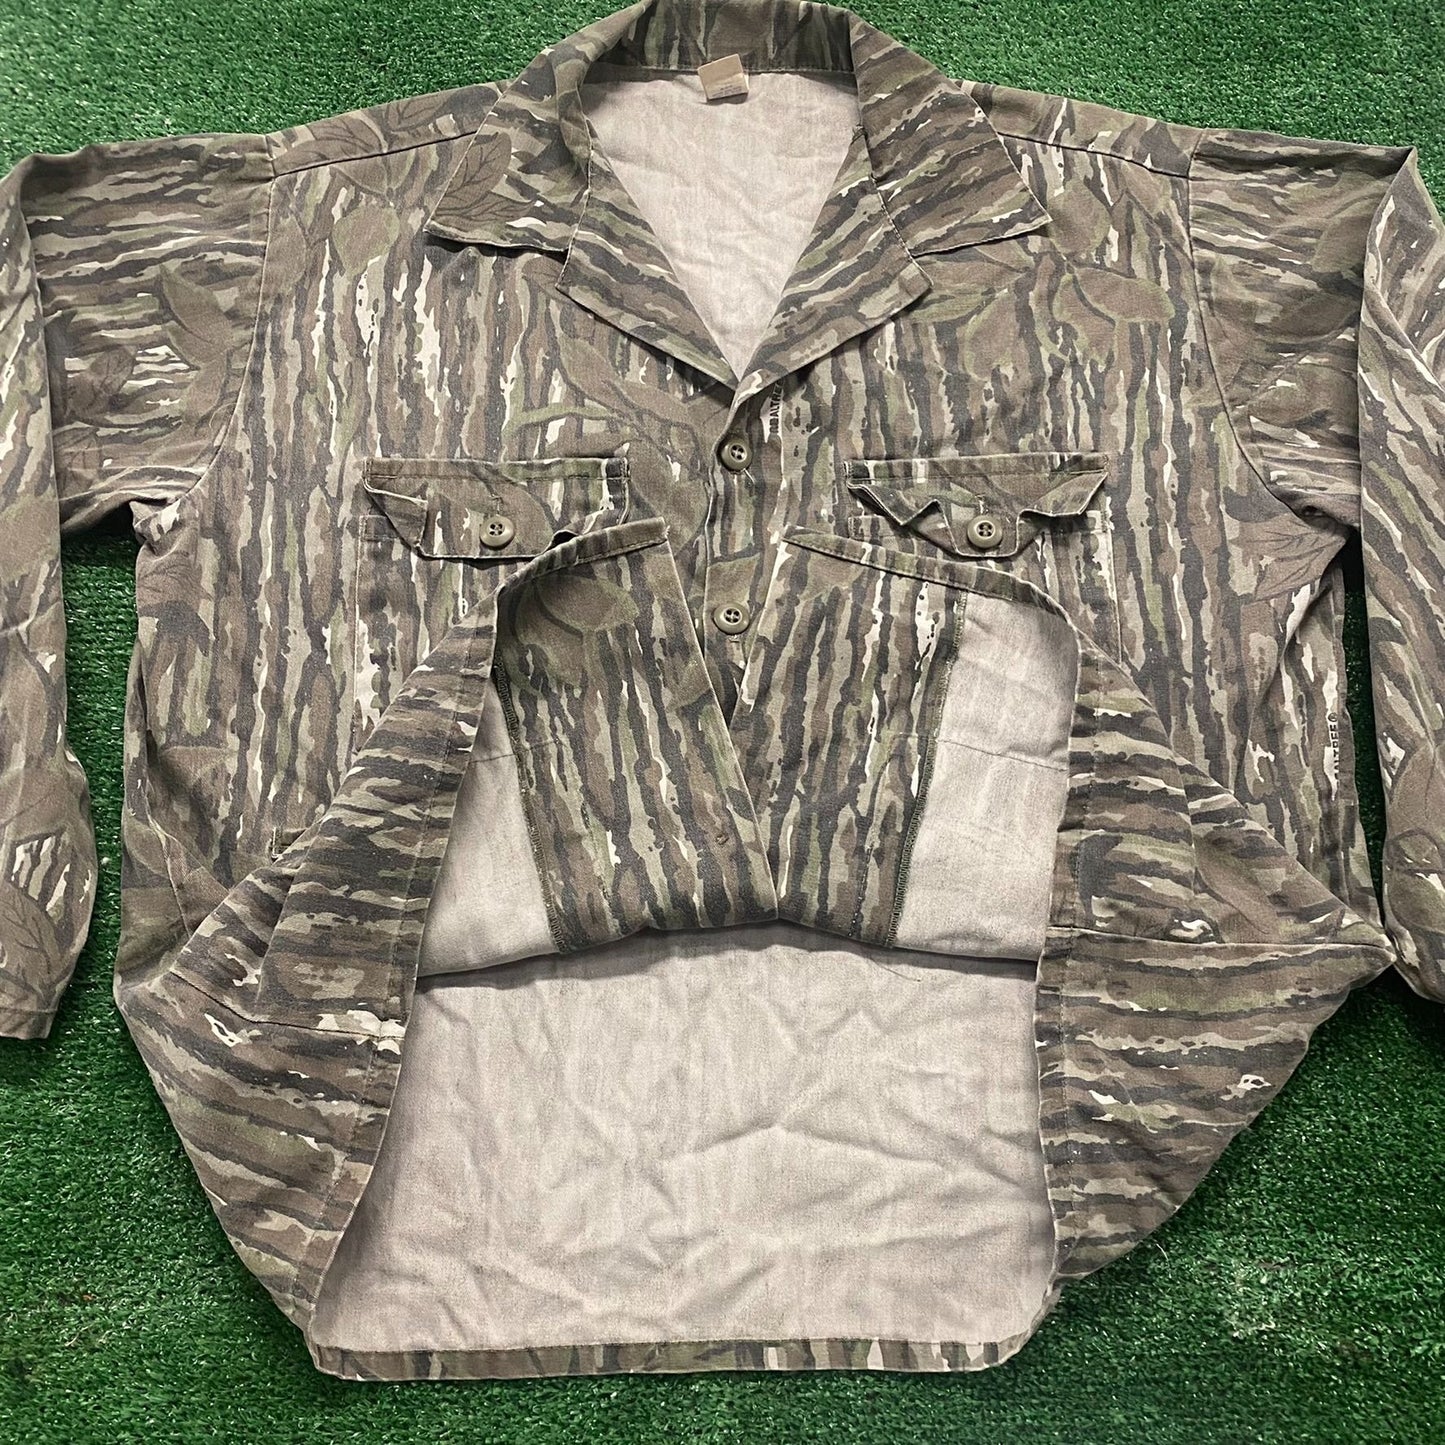 Vintage 90s Realtree Camo Field Shirt Jacket Overshirt